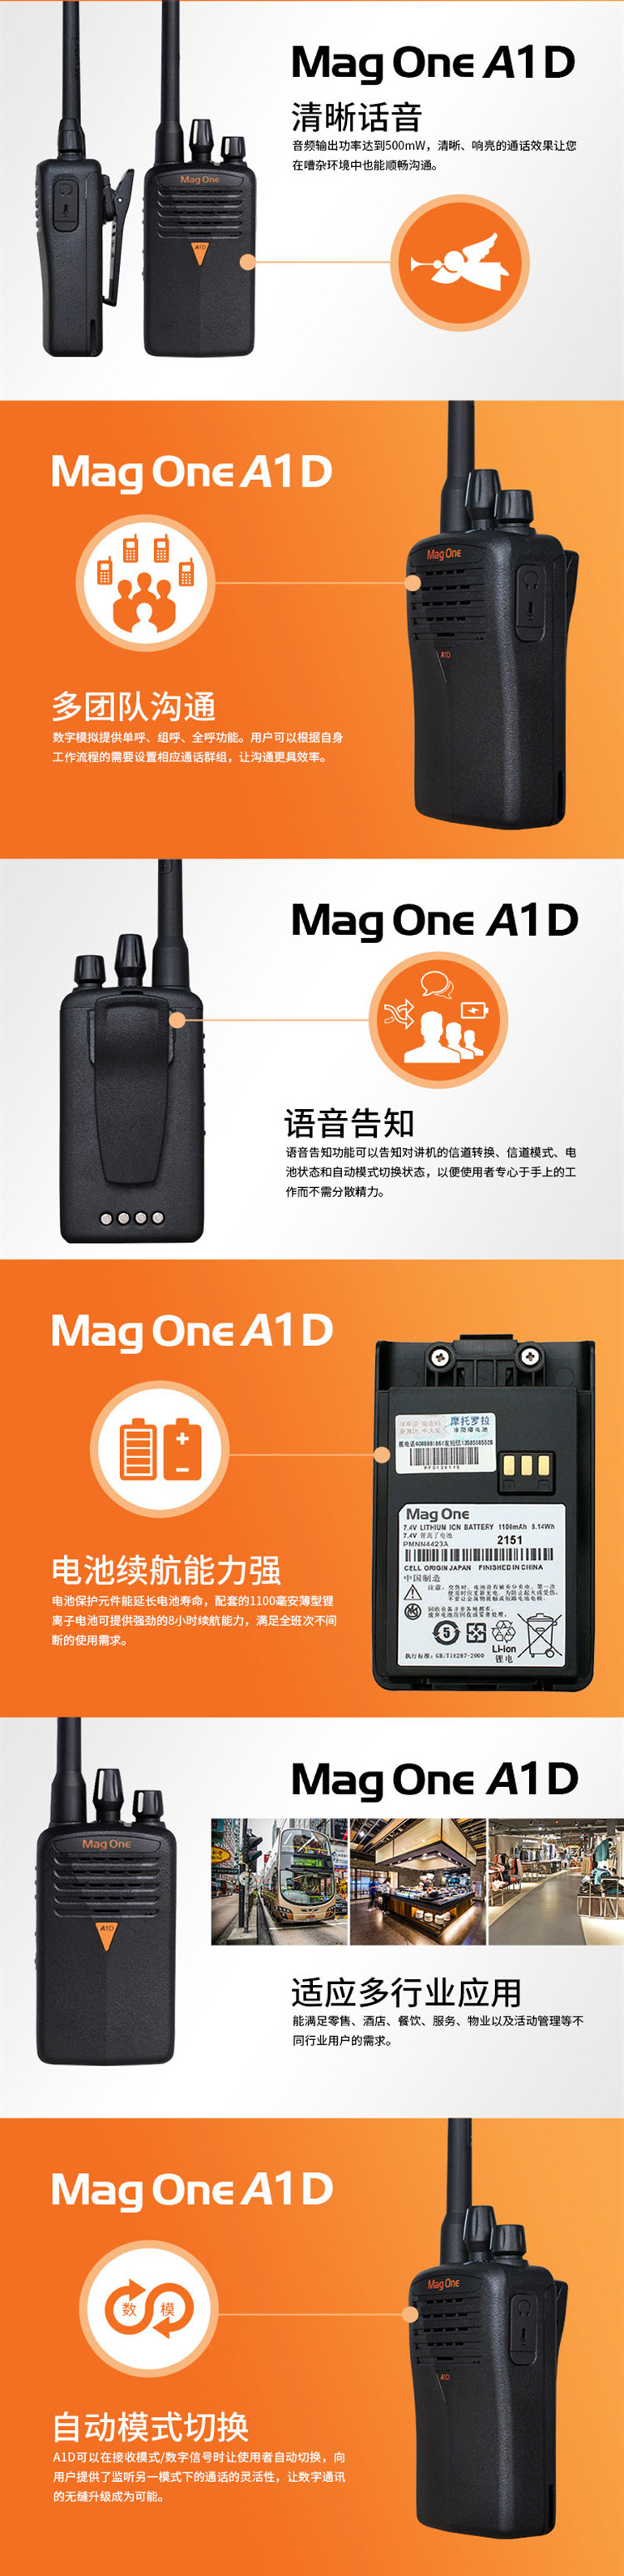 Mag One A1D 数字商用手持无线对讲机